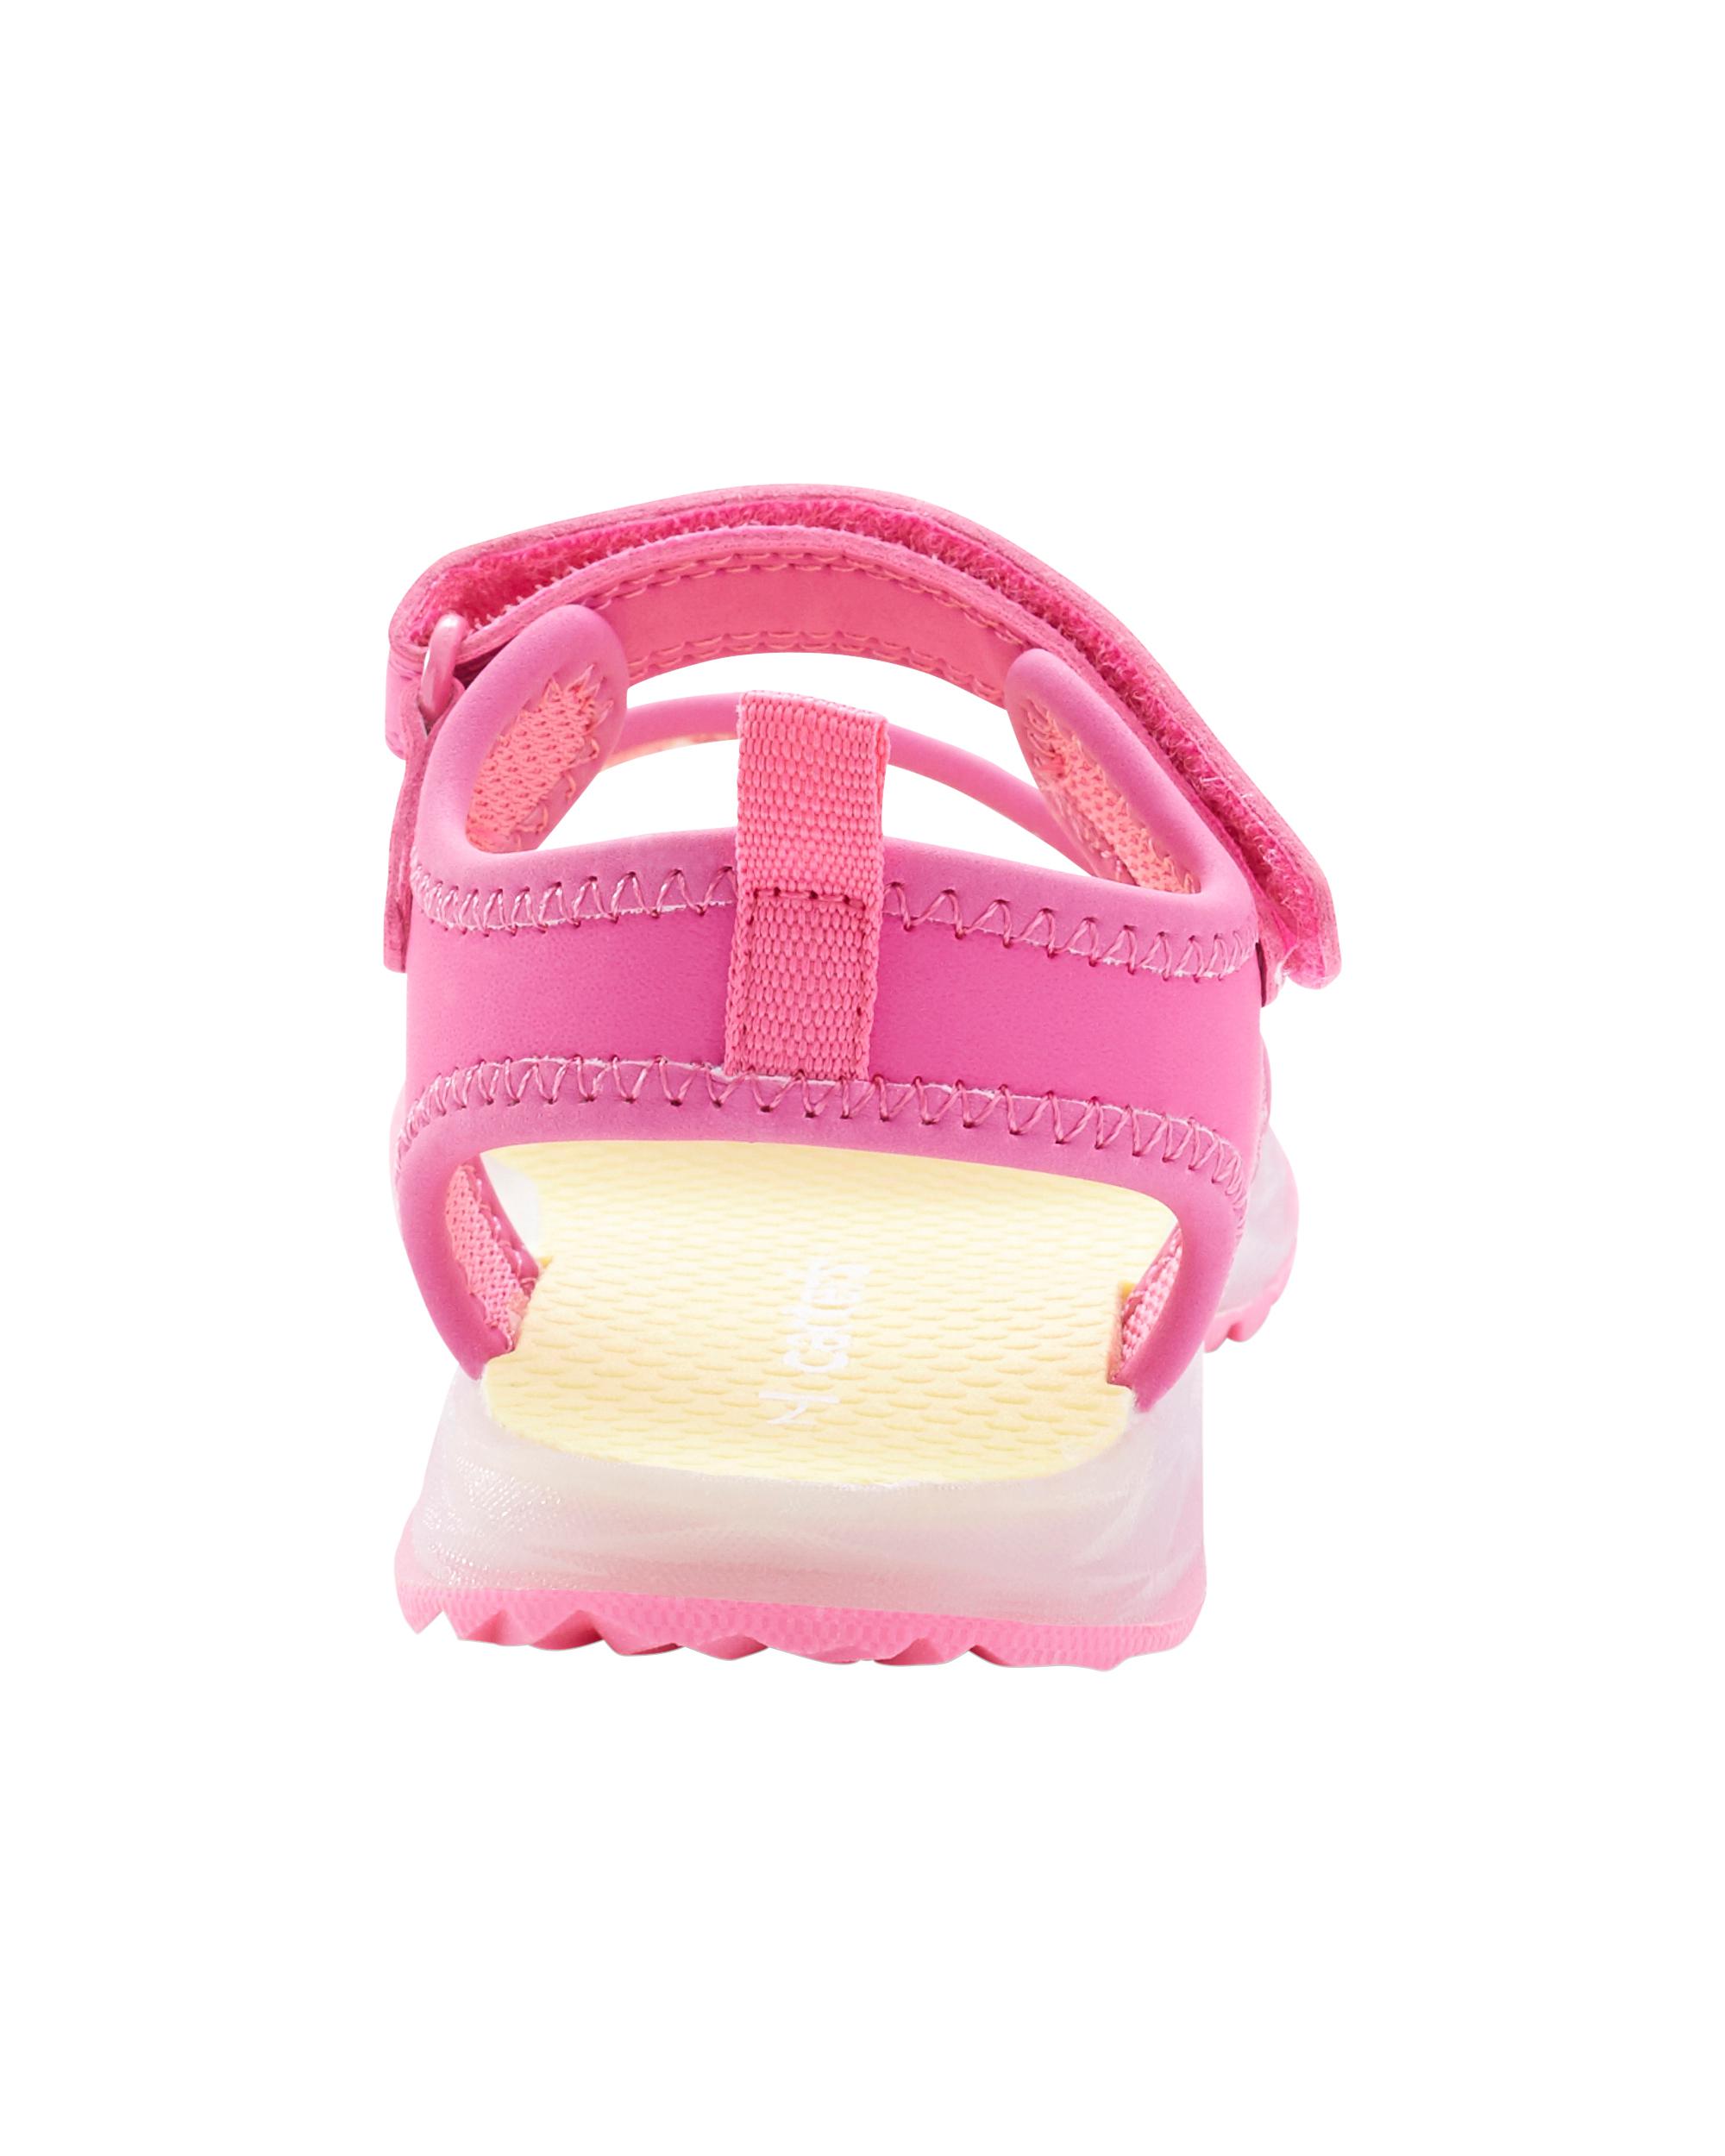 Smiley Face Light-Up Sandals